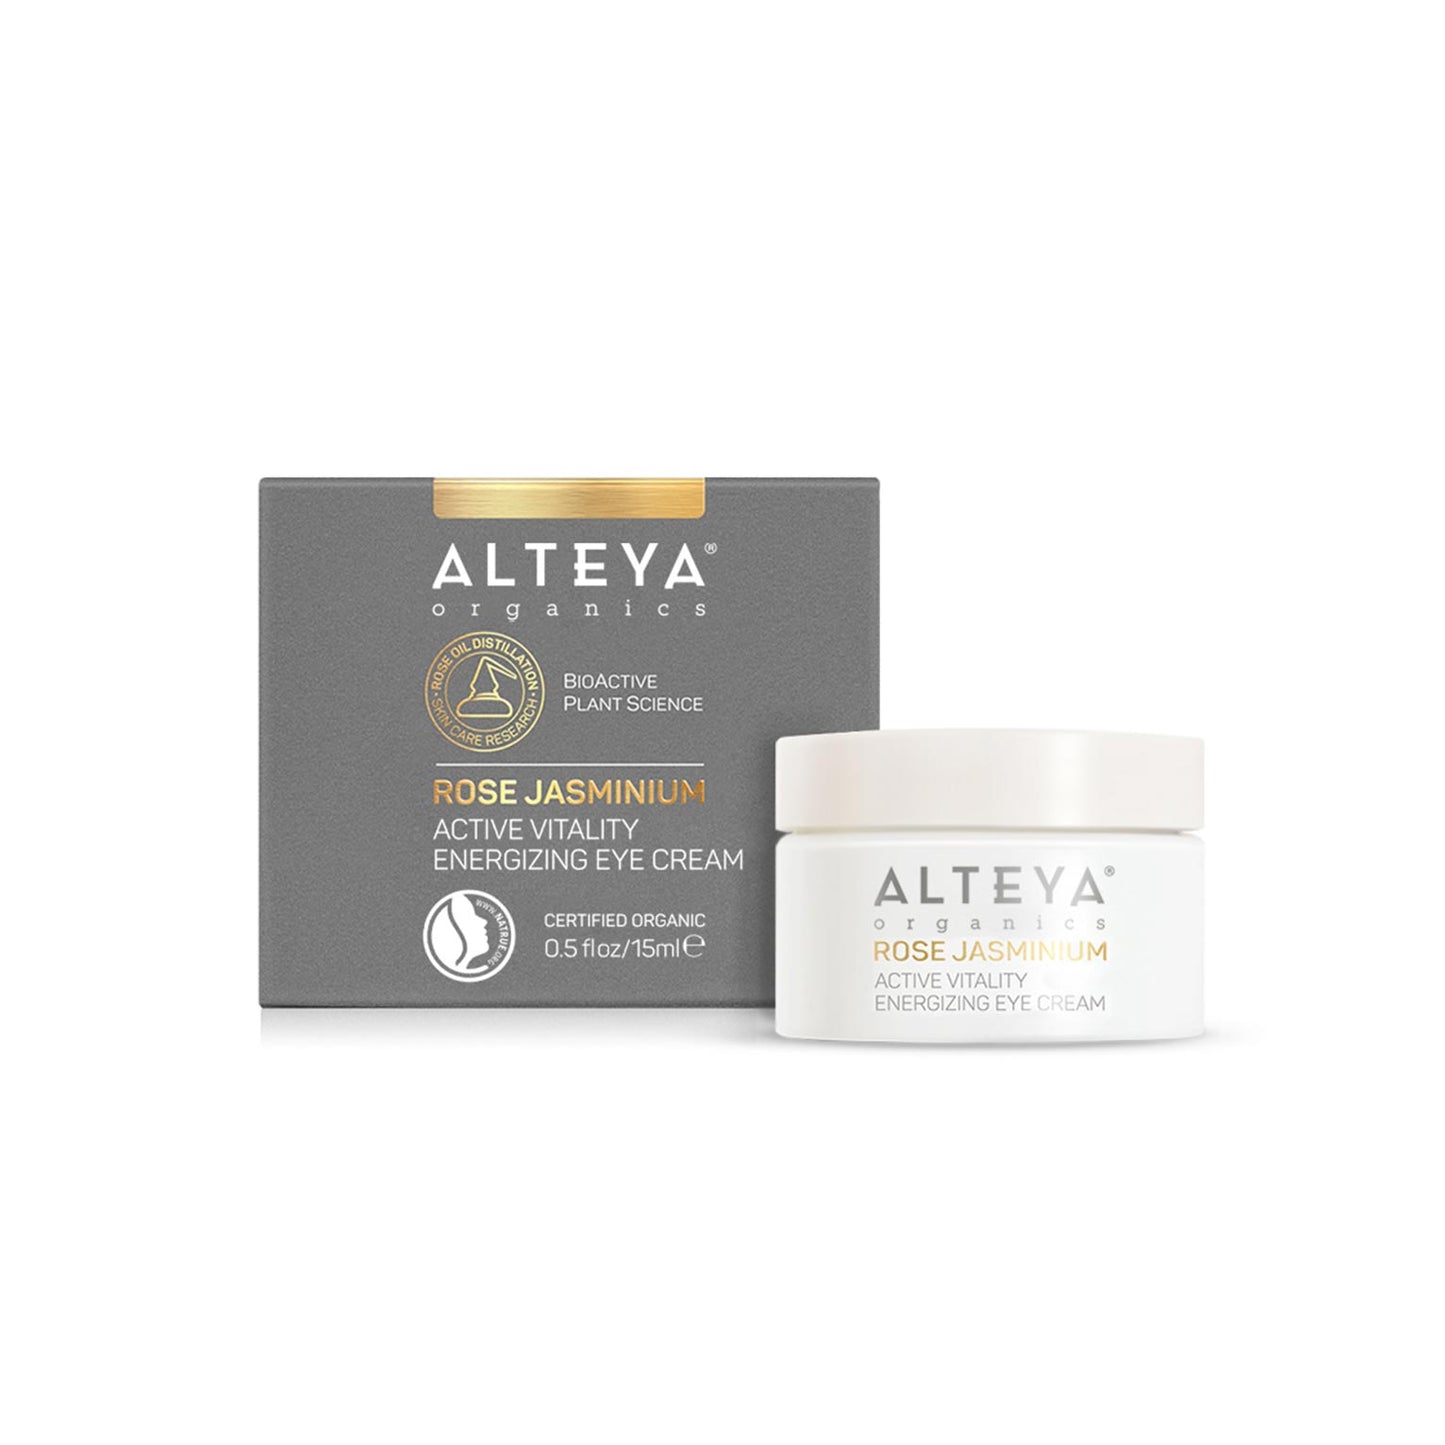 ✅ Alteya Organics Active Vitality Energizing Eye Cream - Rose Jasminium 15ml